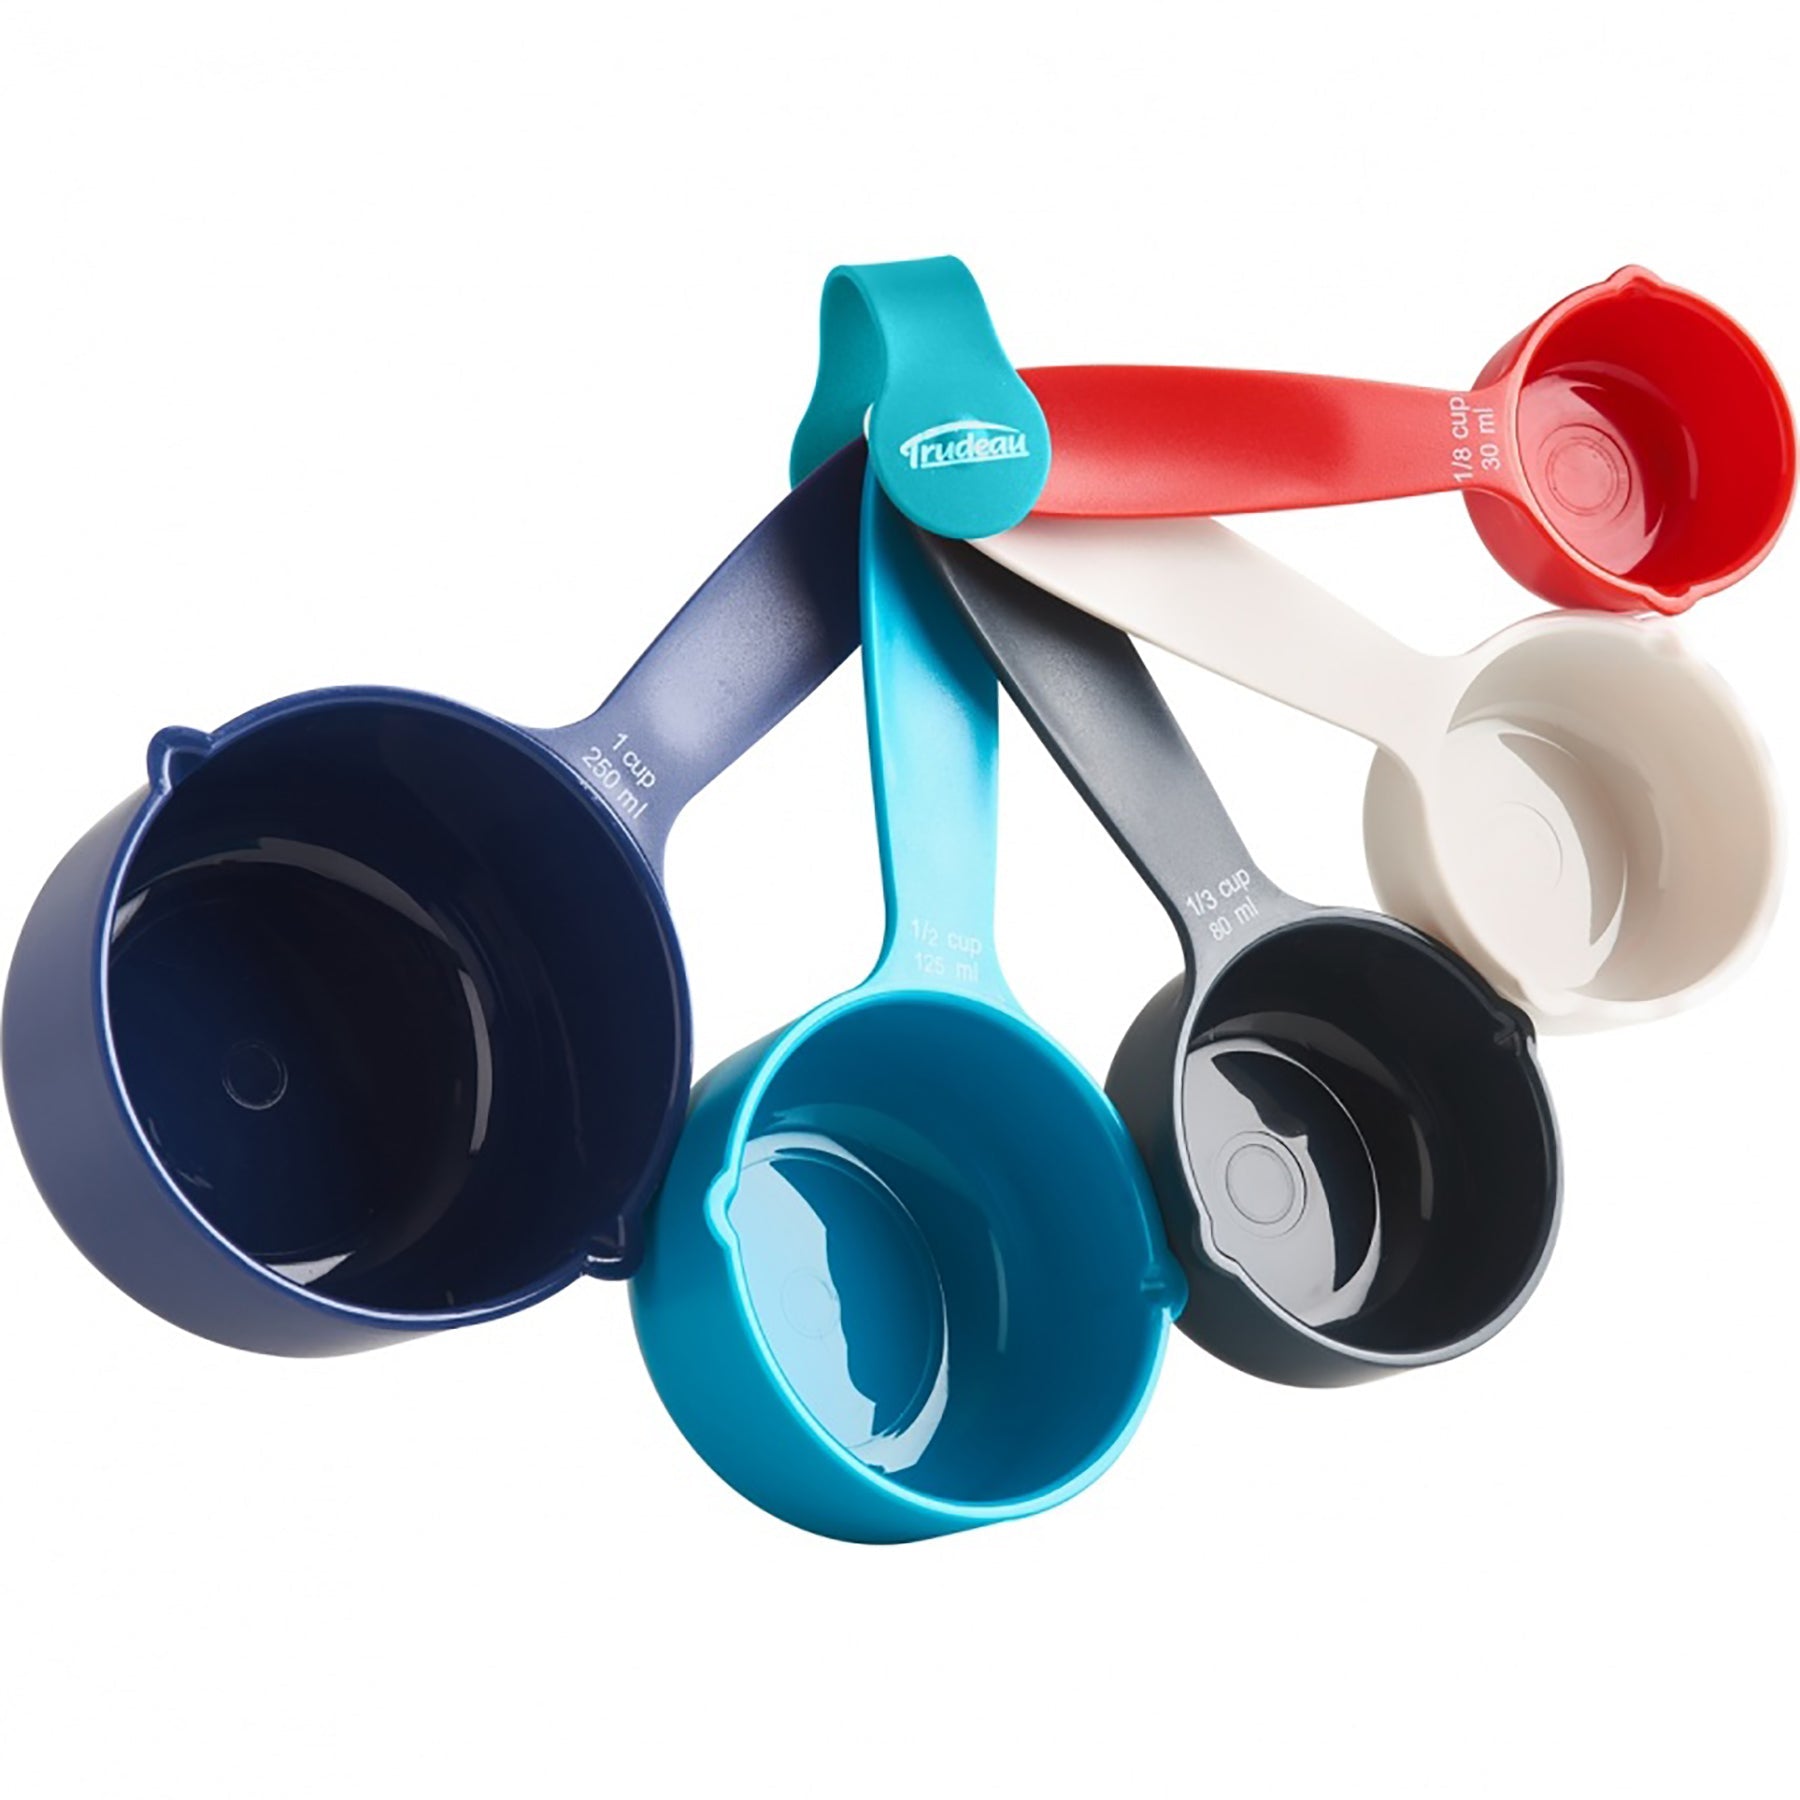 Trudeau 5pcs Measuring Cups Set Shock Resistant Plastic BPA Free 1/8 to 1 Cup